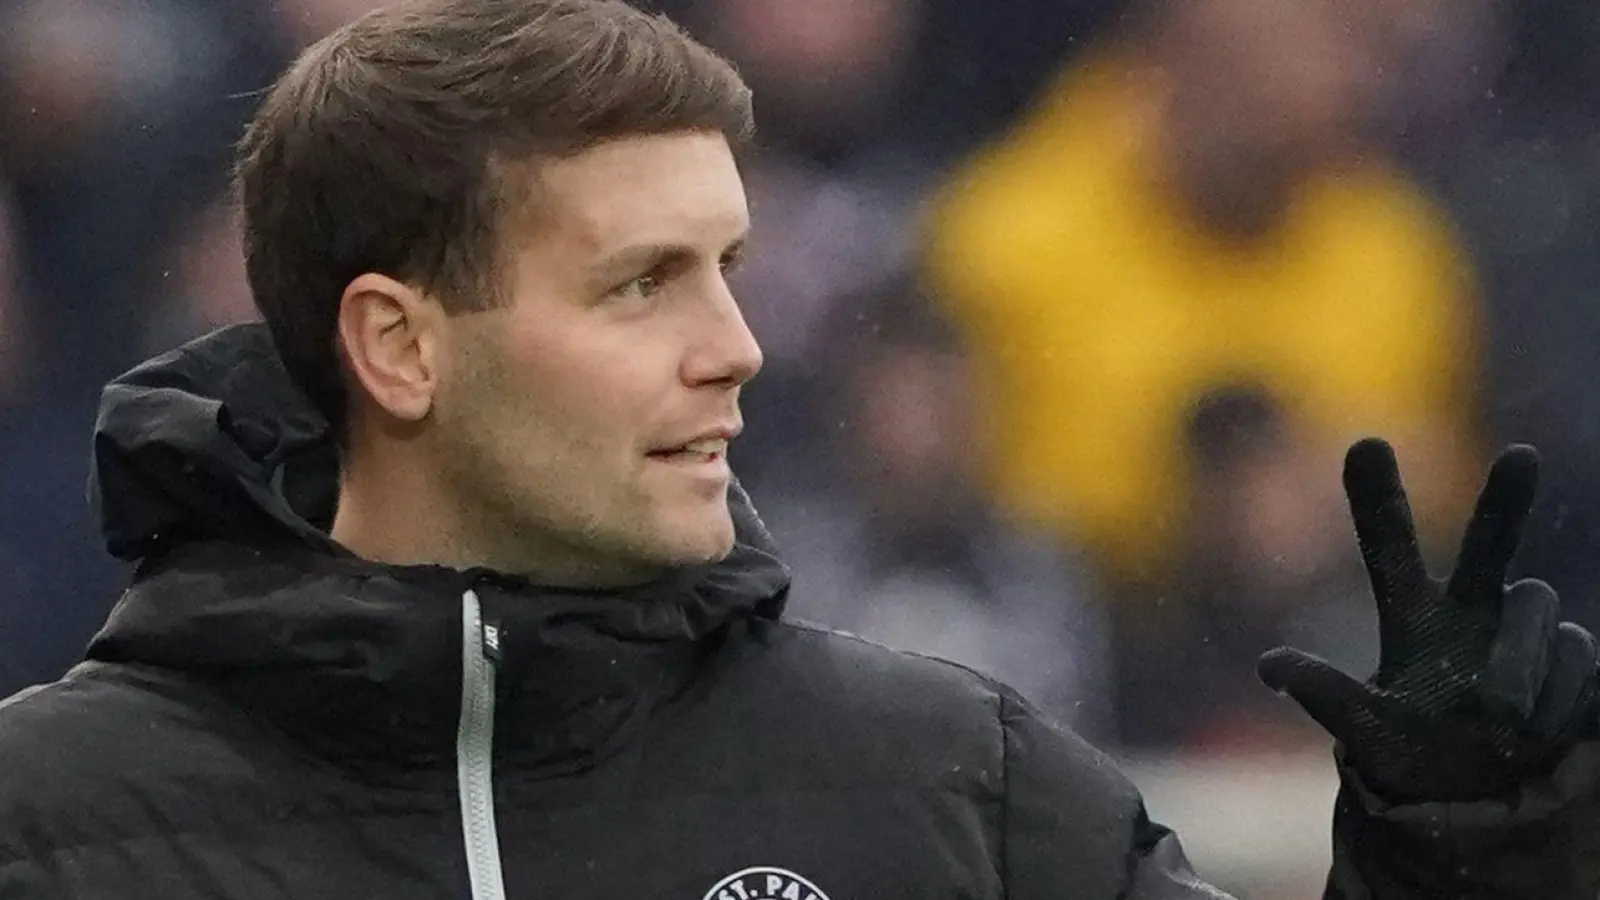 Fabian Hürzeler bleibt Trainer des FC St. Pauli. (Foto: Marcus Brandt/dpa)